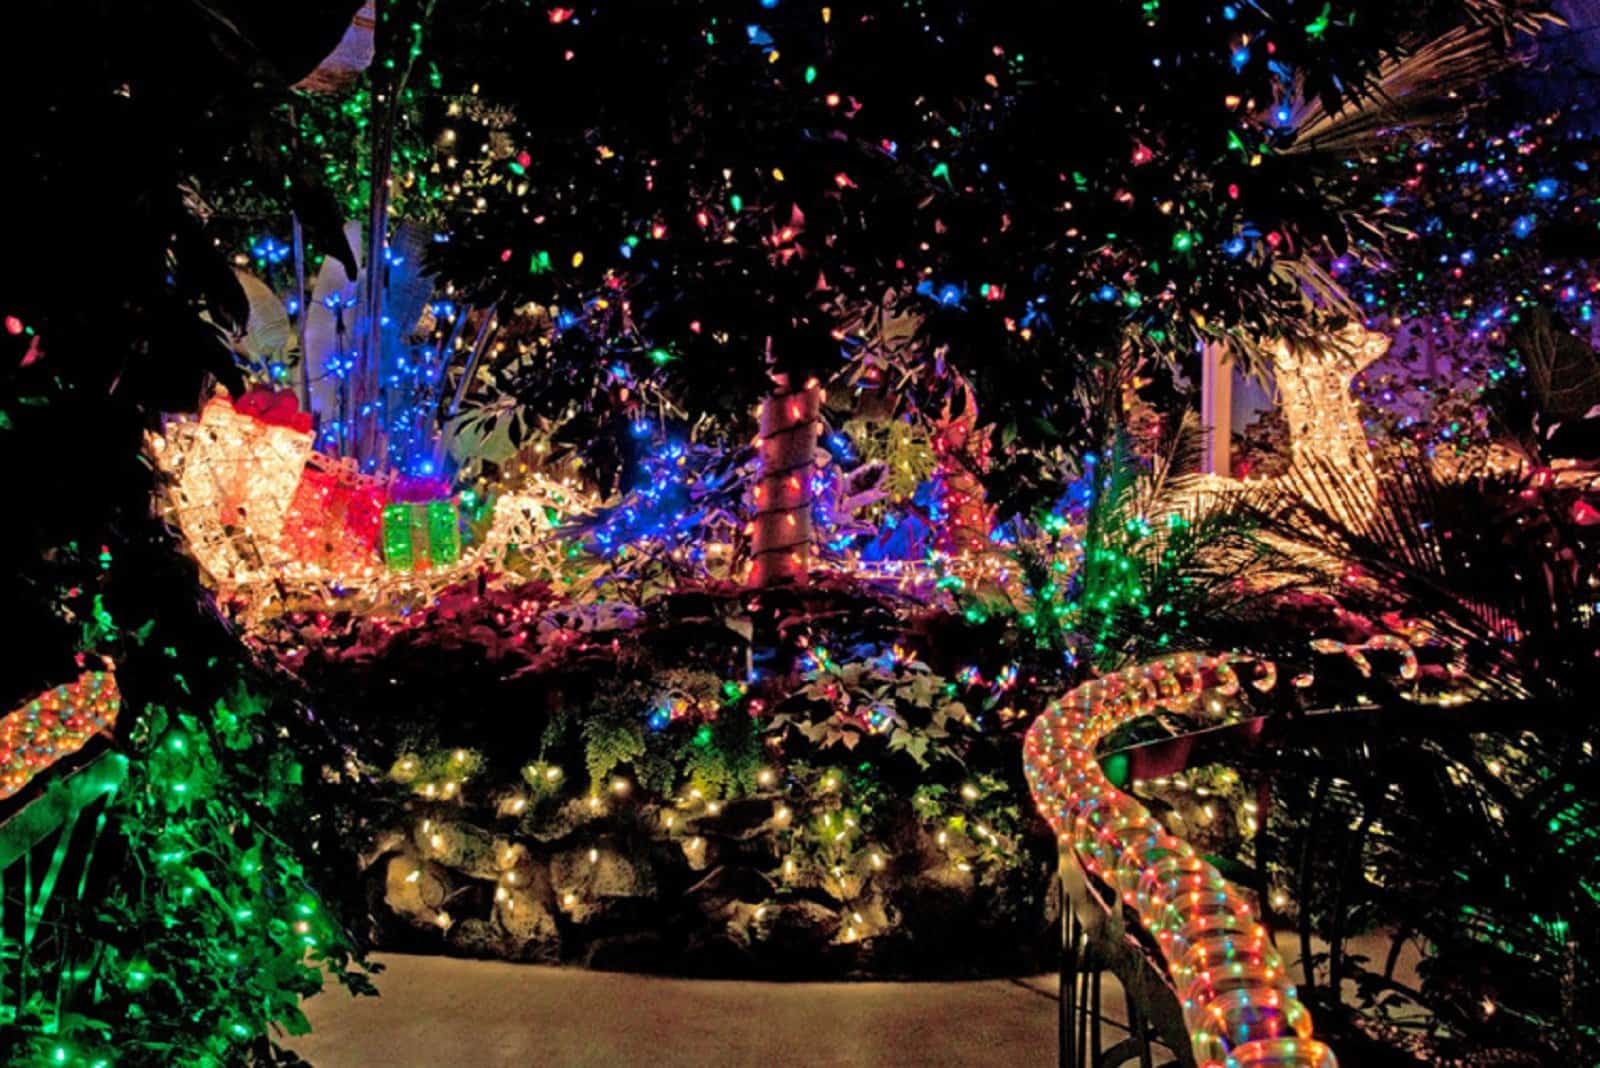 Experience the Magical Christmas Lights in Spokane, Washington